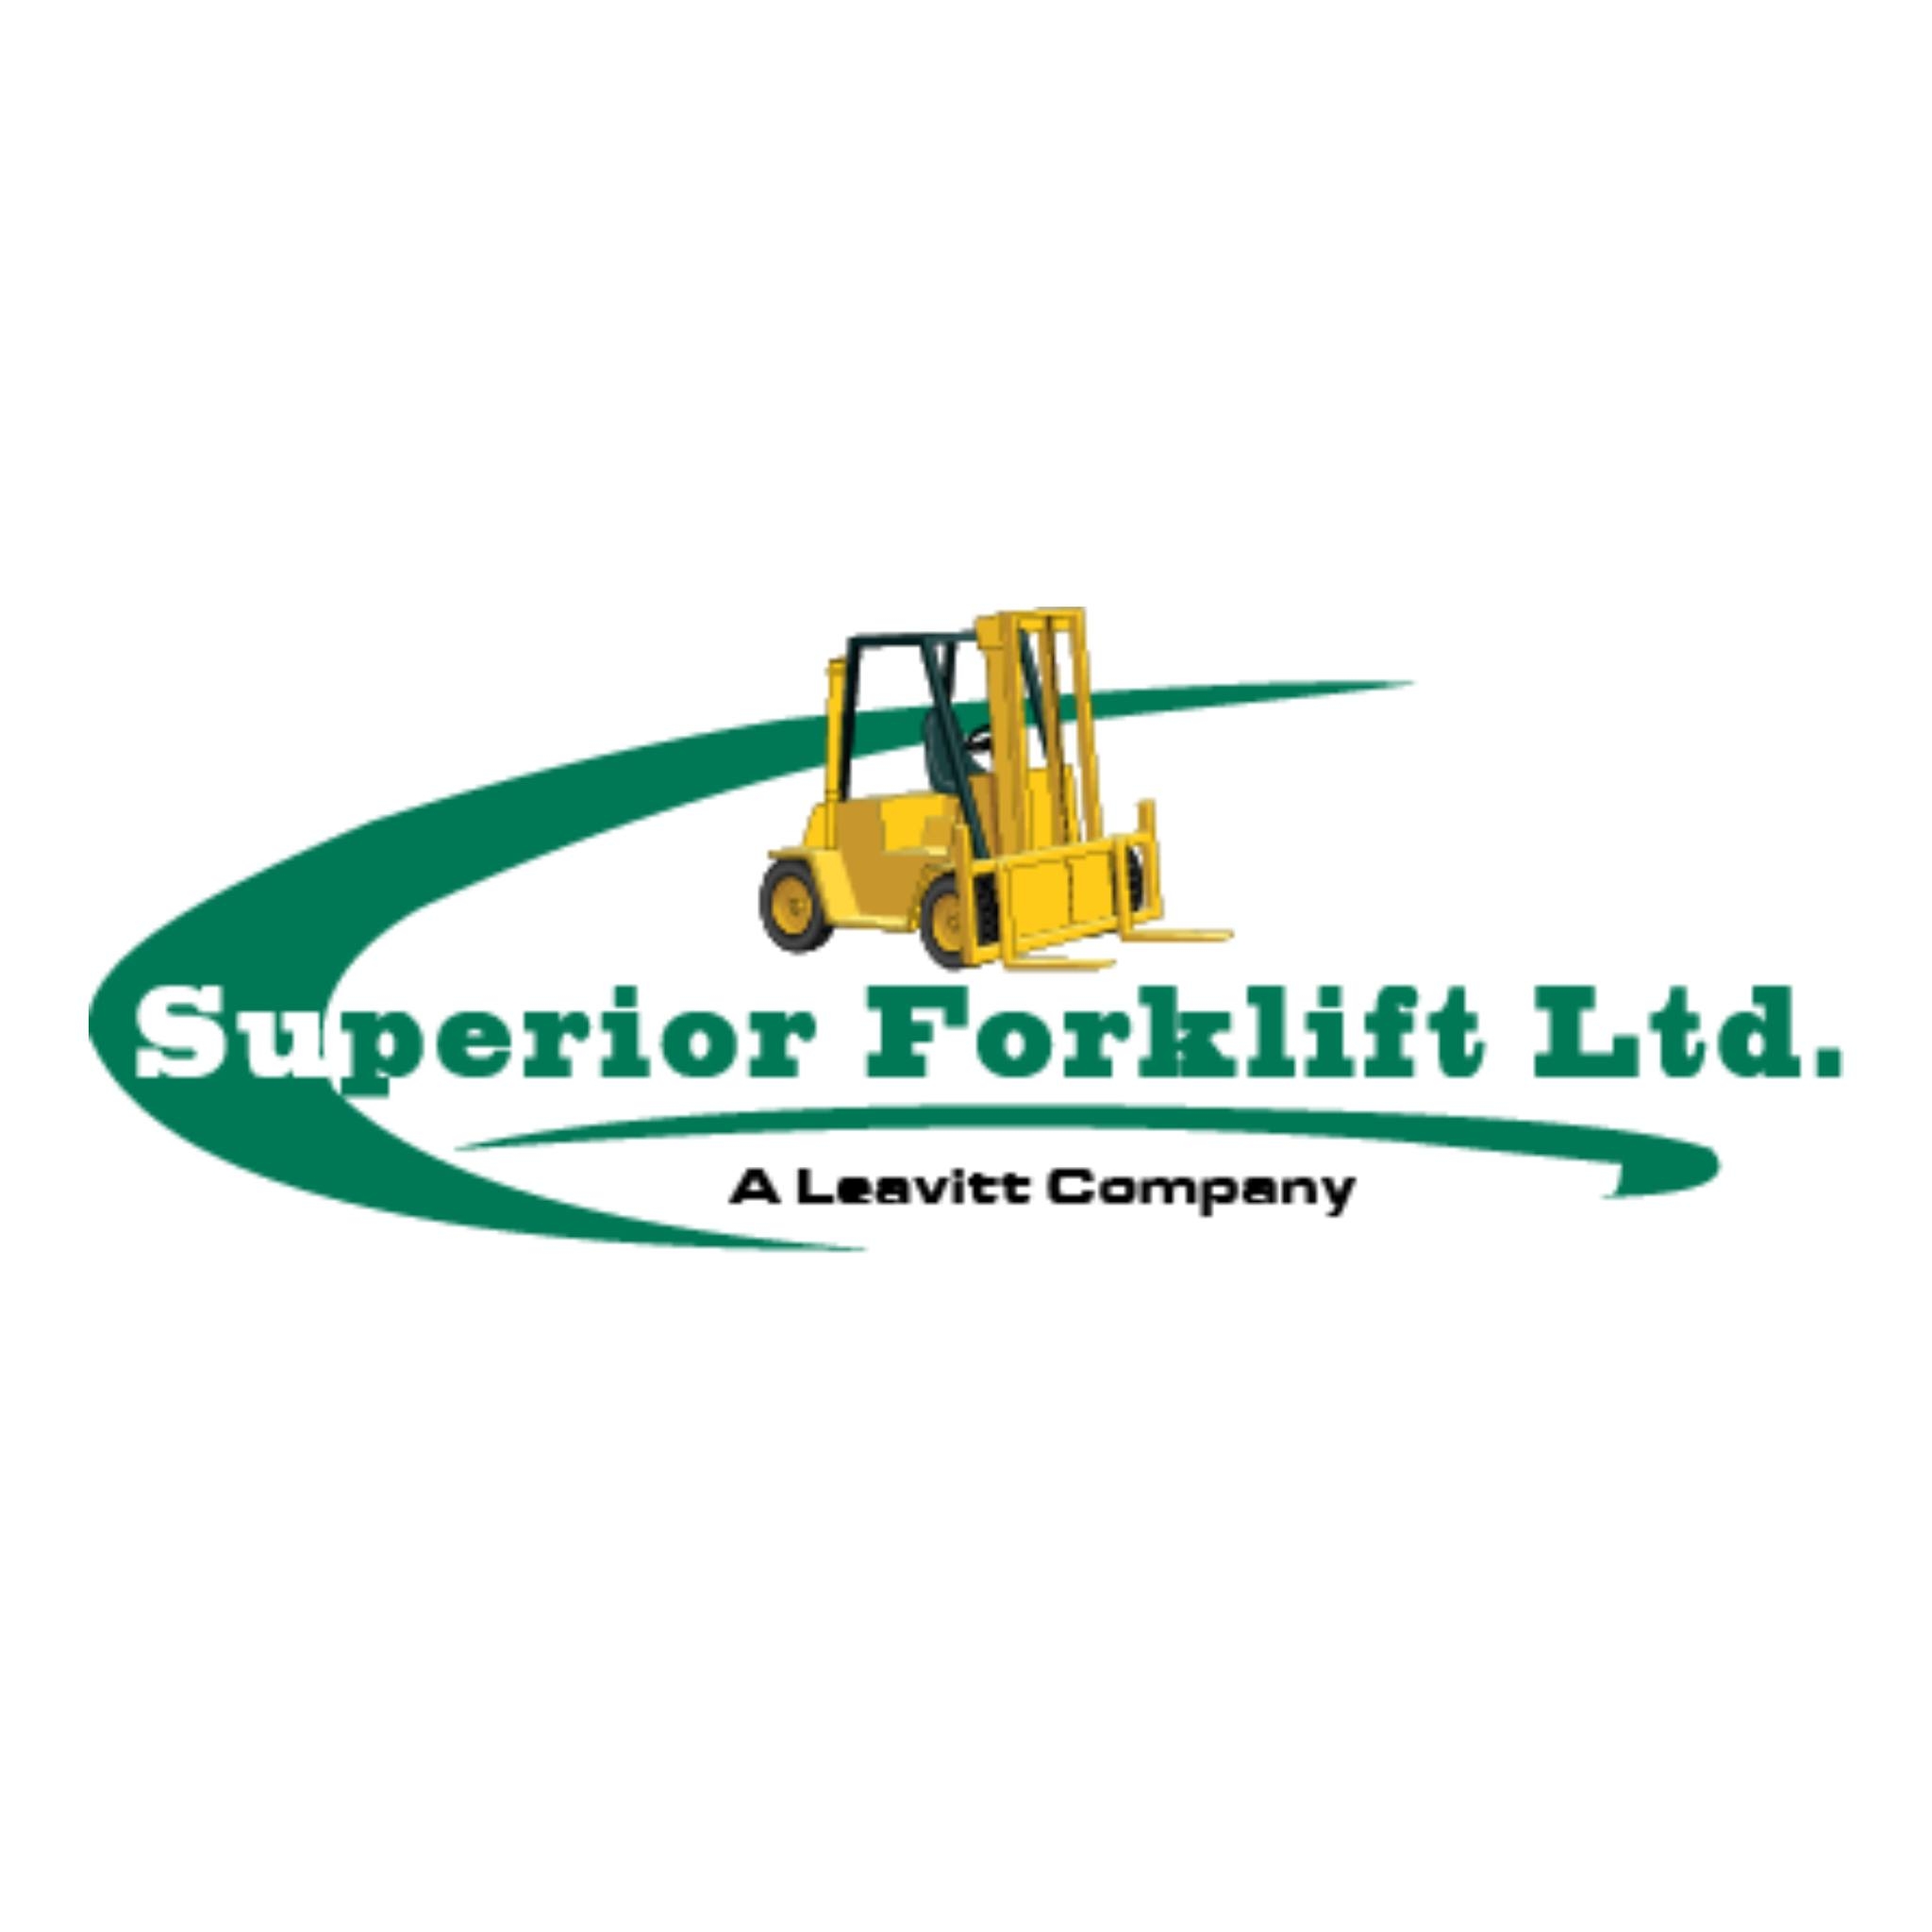 Superior Forklift Ltd. Logo